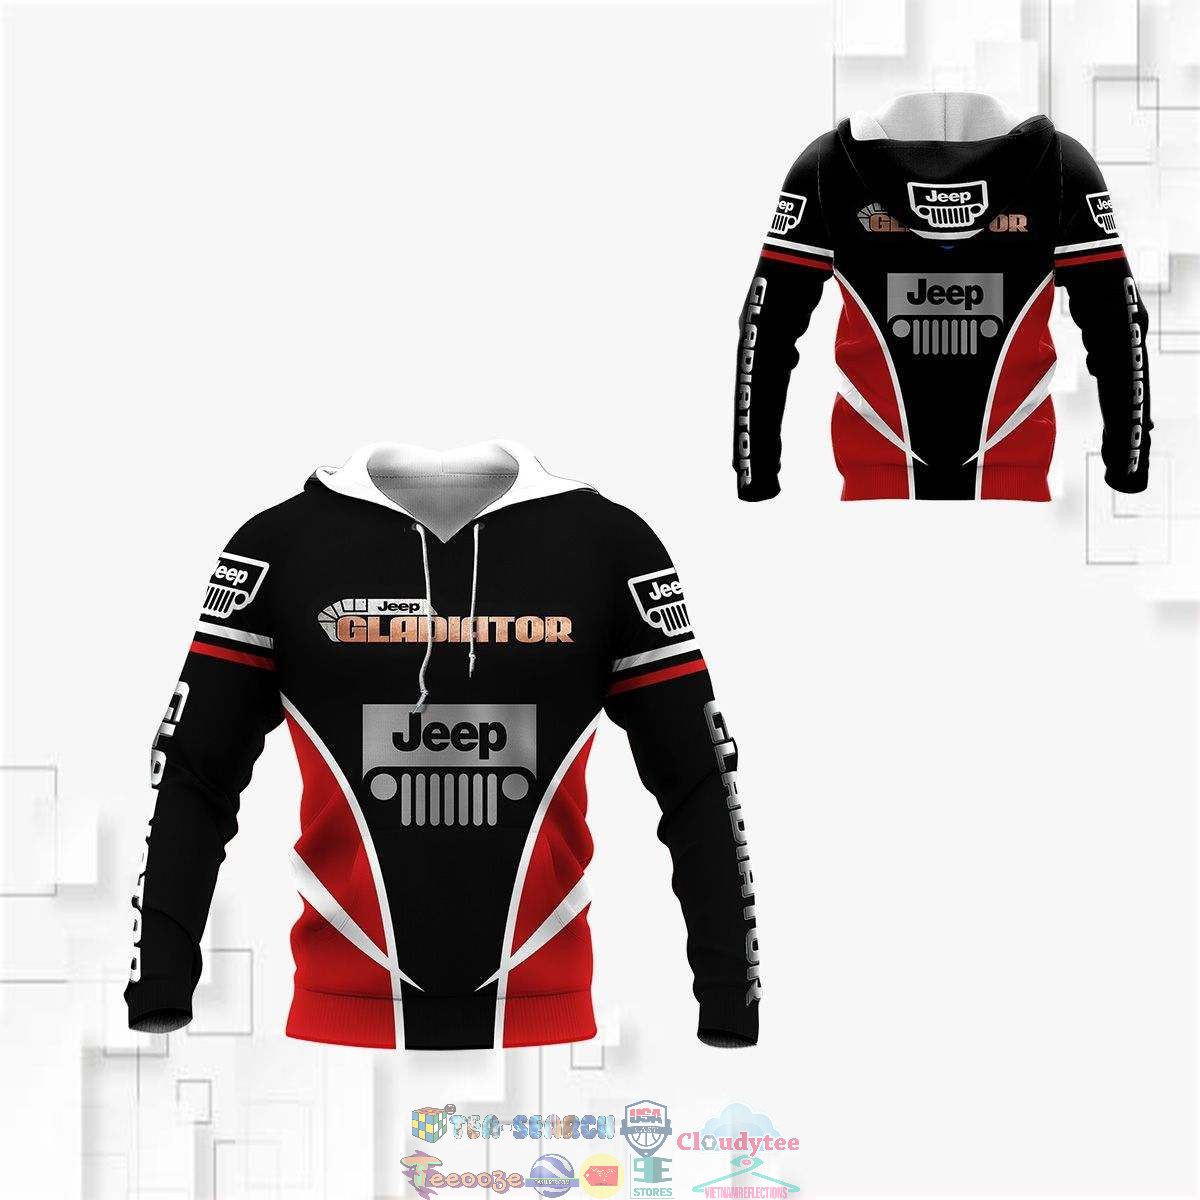 uNmGFIoH-TH100822-55xxxJeep-Gladiator-ver-8-3D-hoodie-and-t-shirt3.jpg